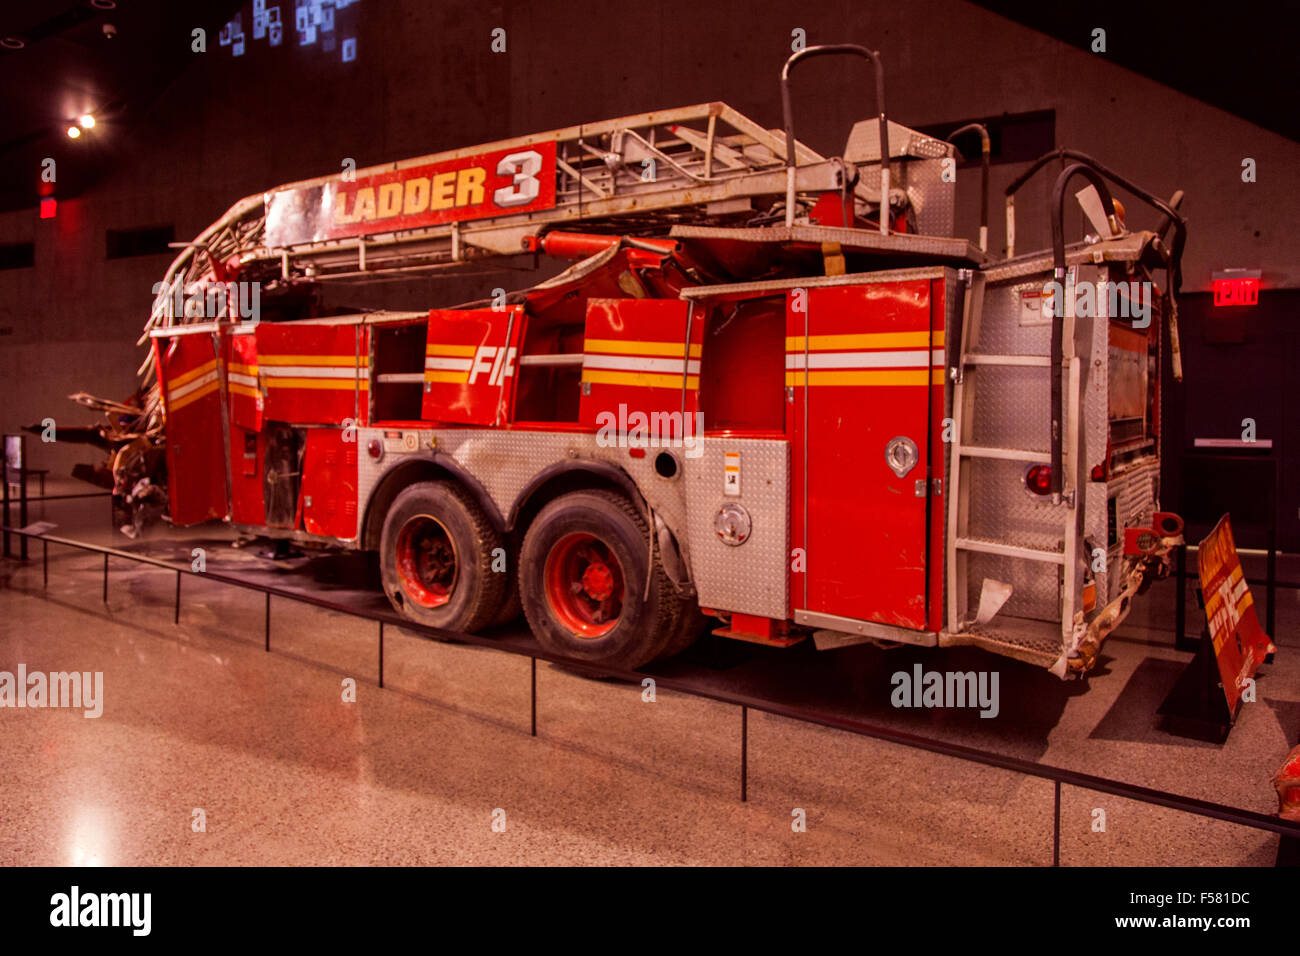 Crushed fire truck, ladder 3, National September 11 Memorial ...